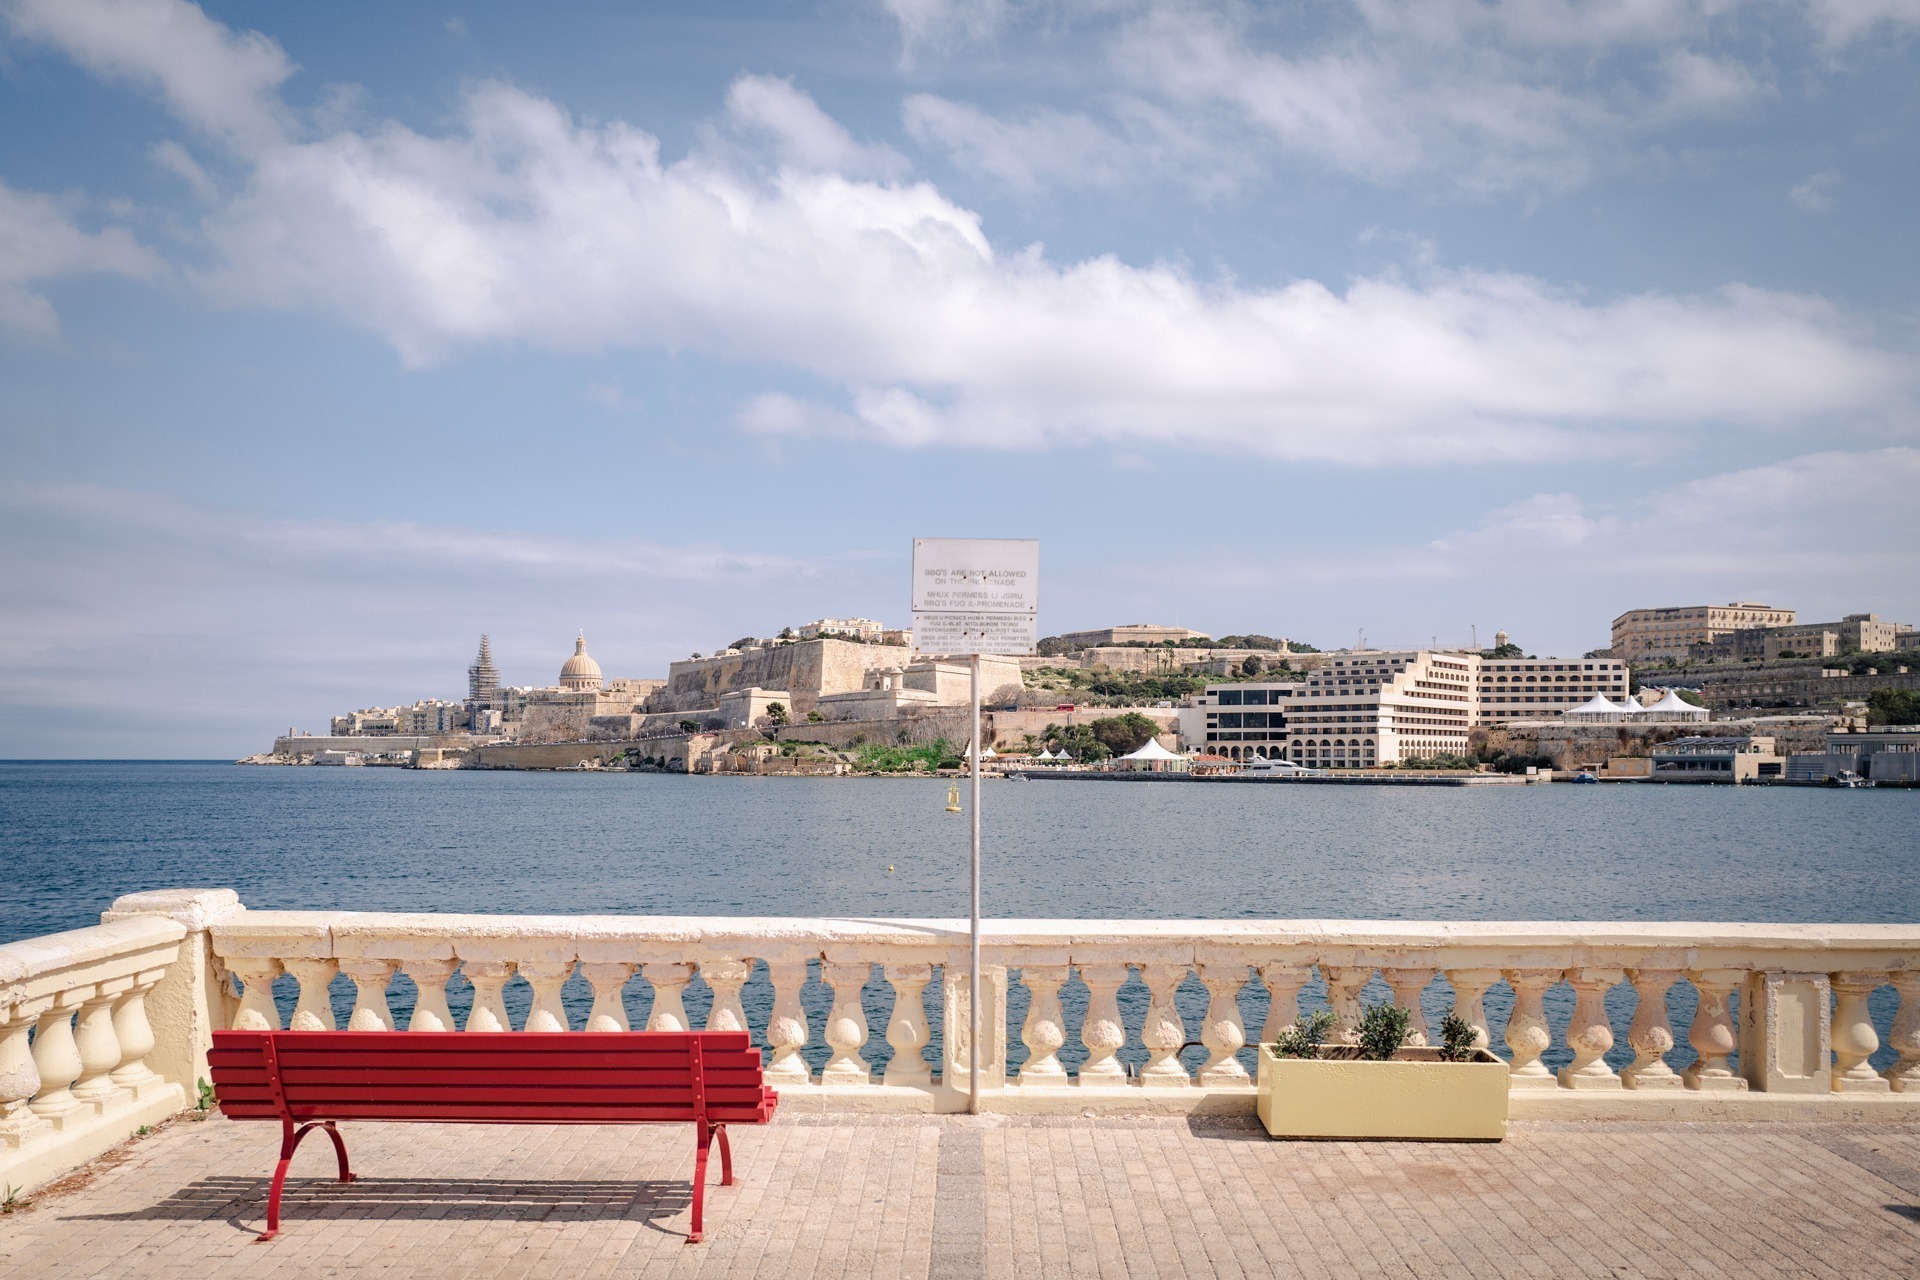 Seafront of Gezira in Malta island